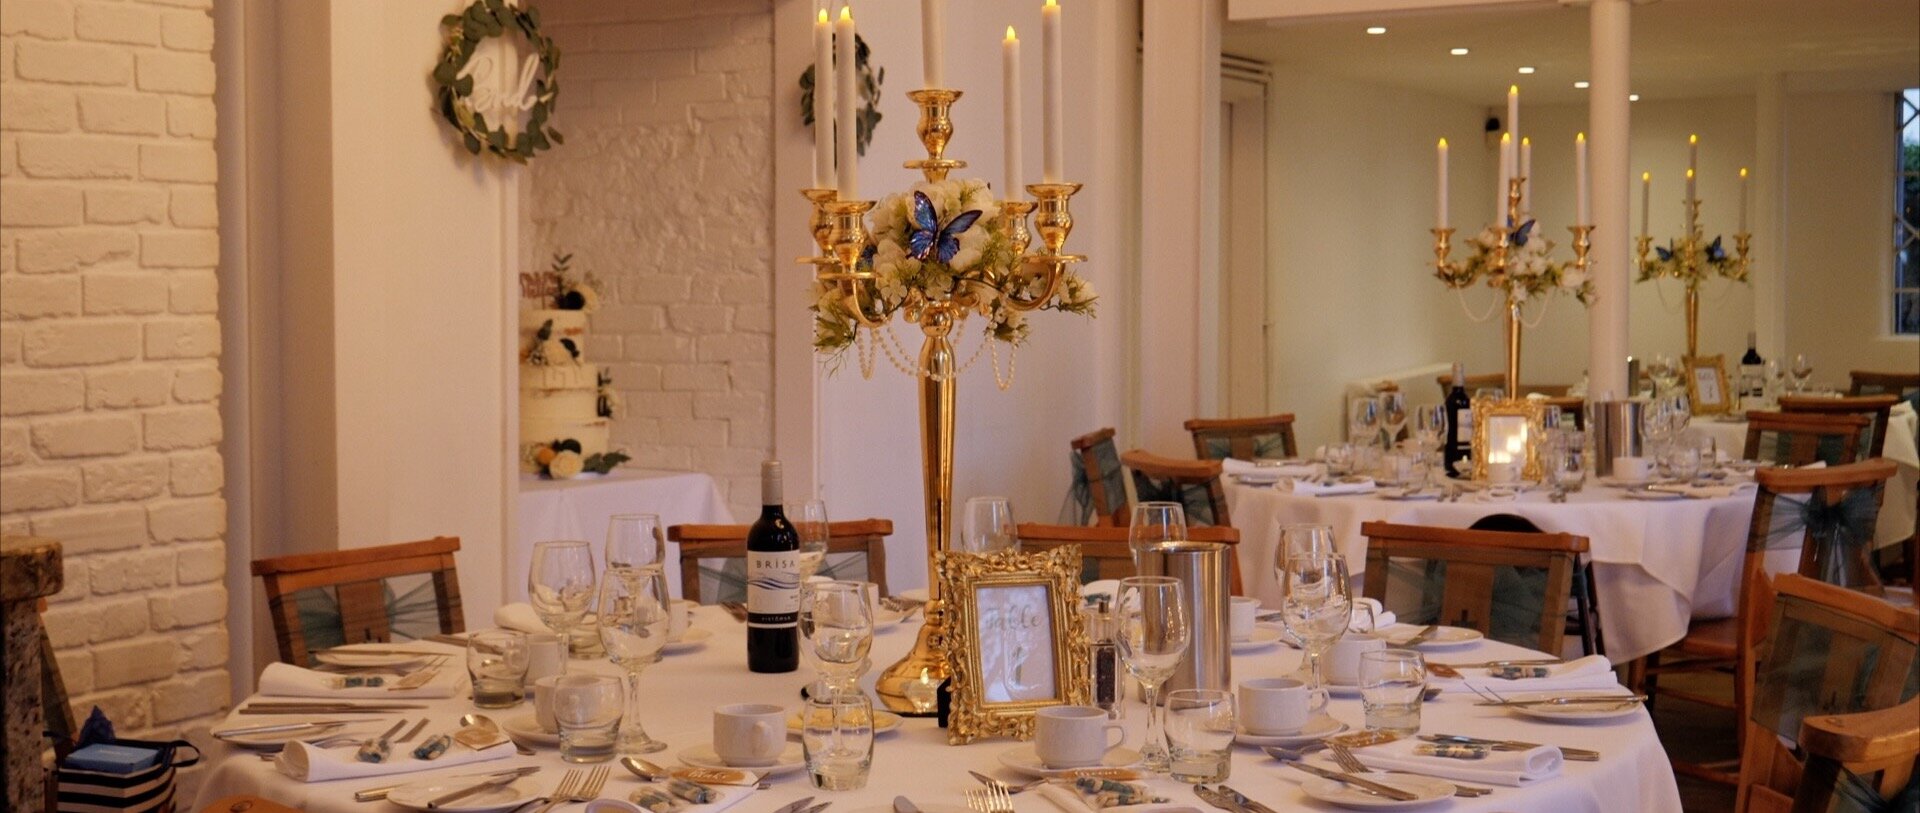 Old Parish Rooms Wedding Reception Videography.jpg